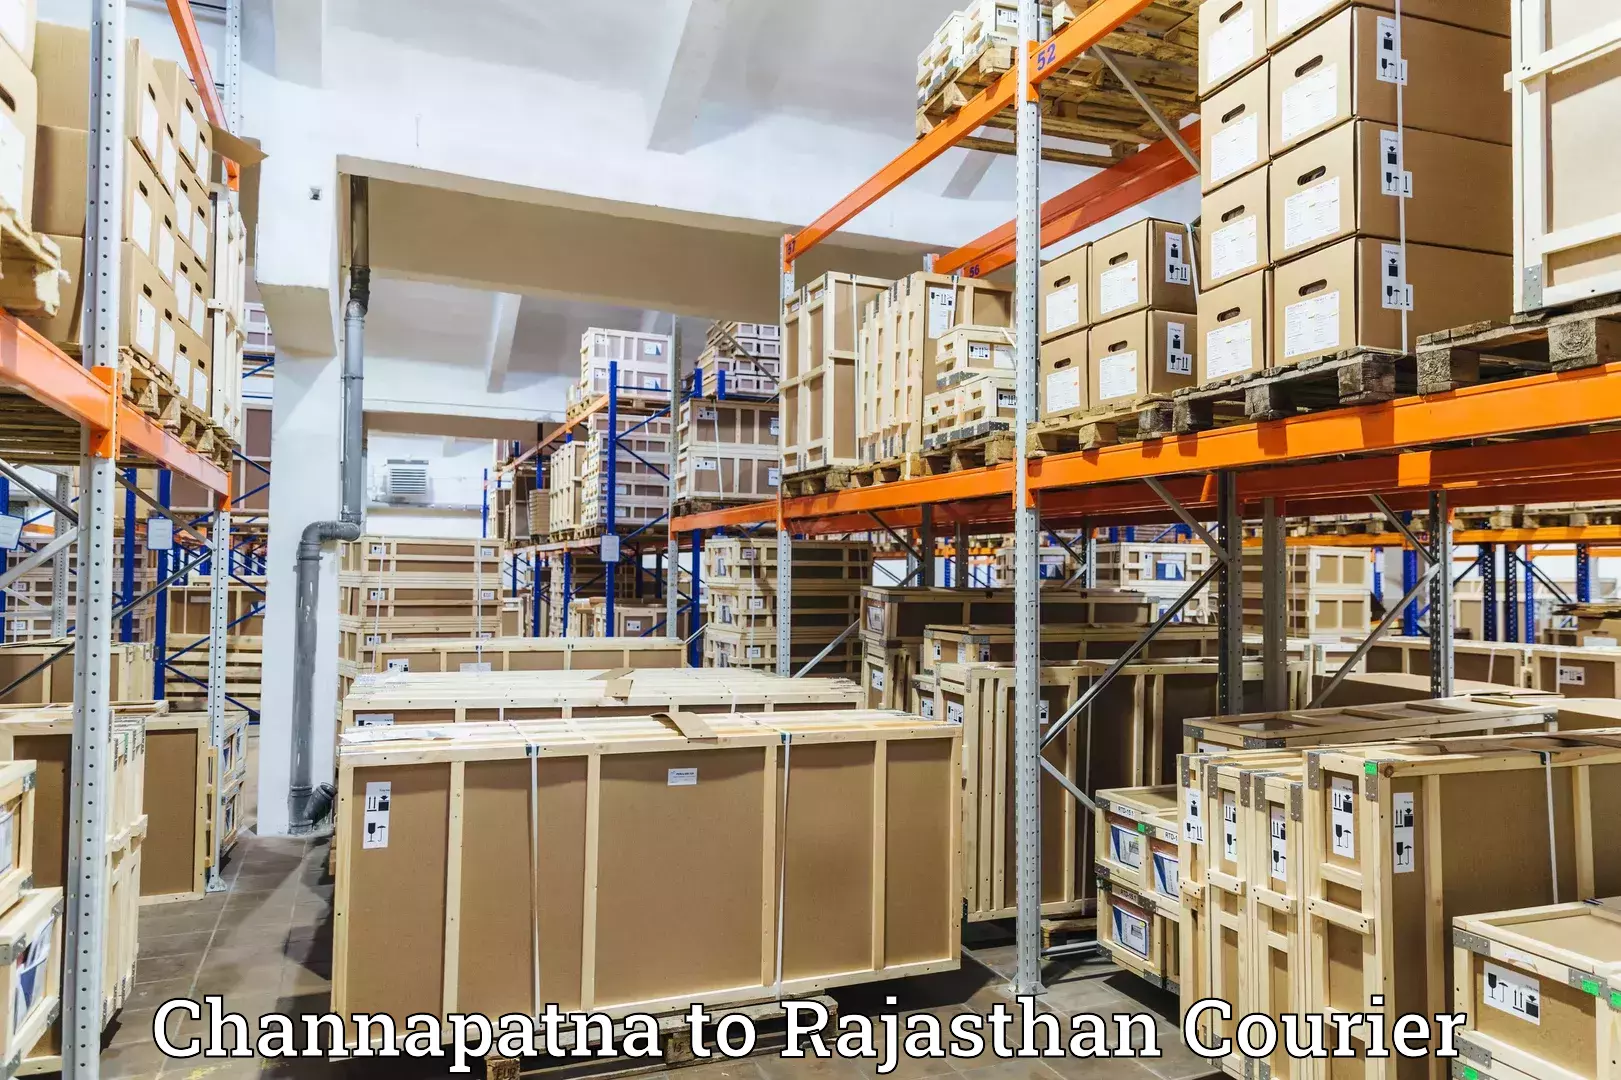 Global shipping networks Channapatna to Mathania